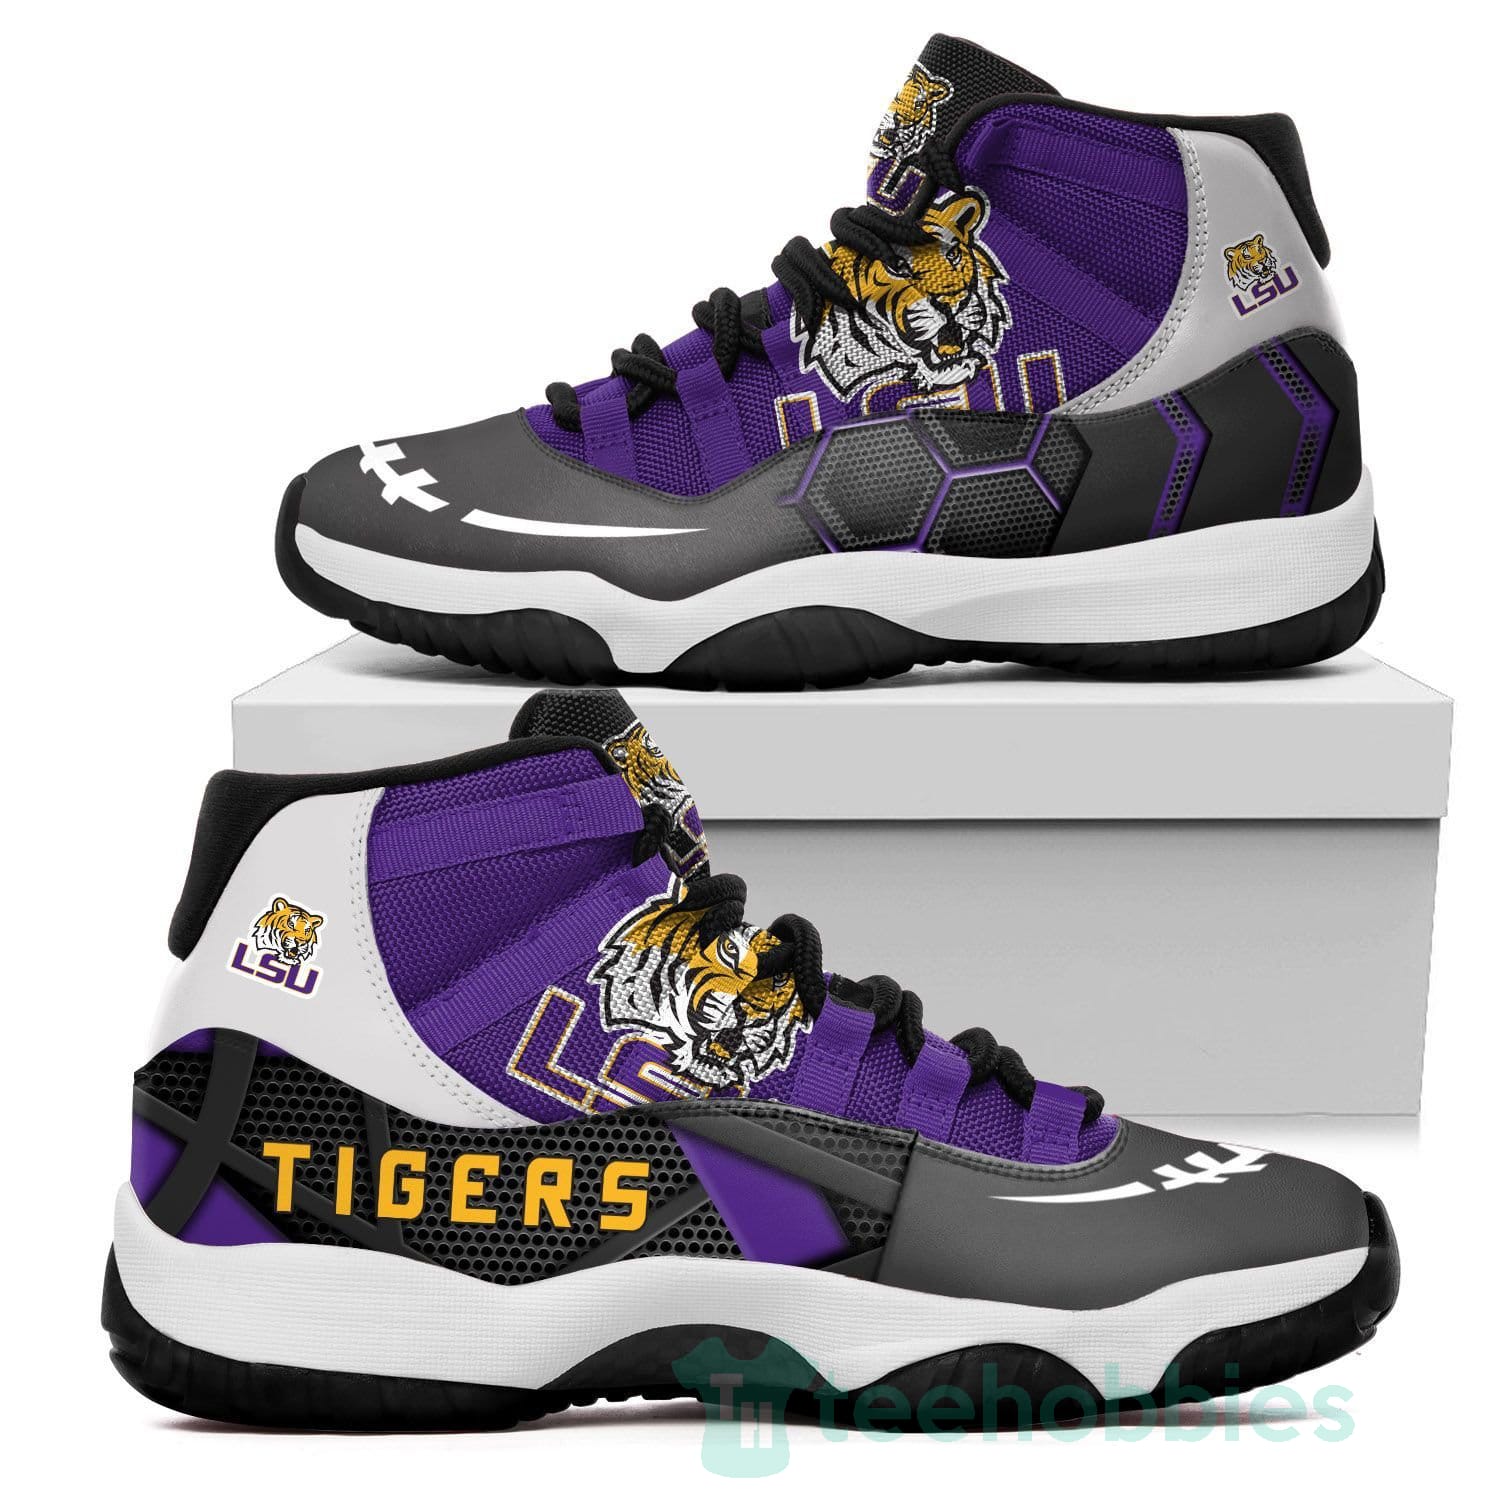 LSU Tigers New Air Jordan 11 Shoes Design Product photo 1